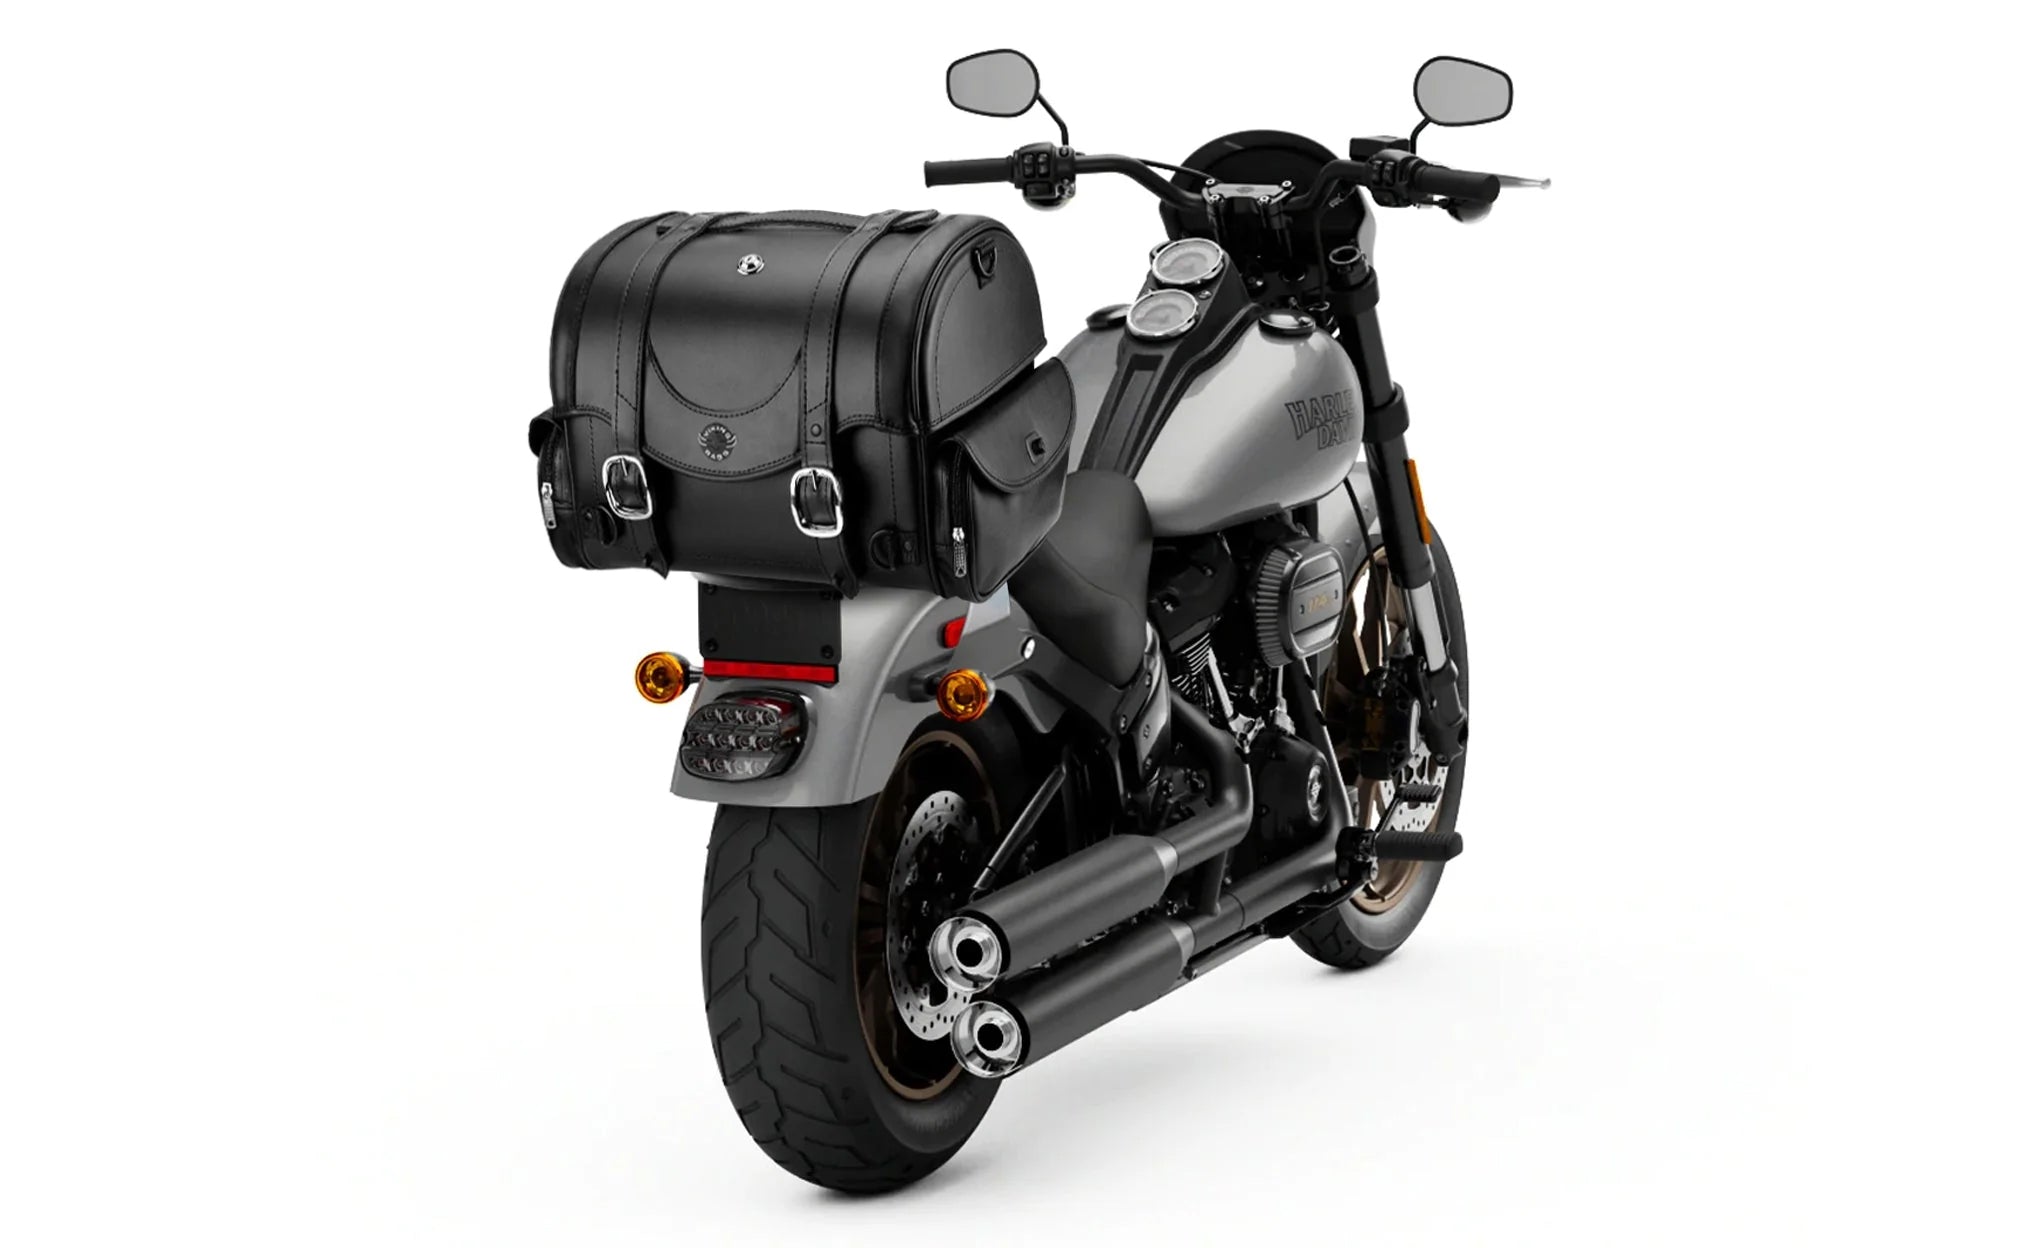 21L - Century Medium Triumph Leather Motorcycle Trunk Bag on Bike Photo @expand